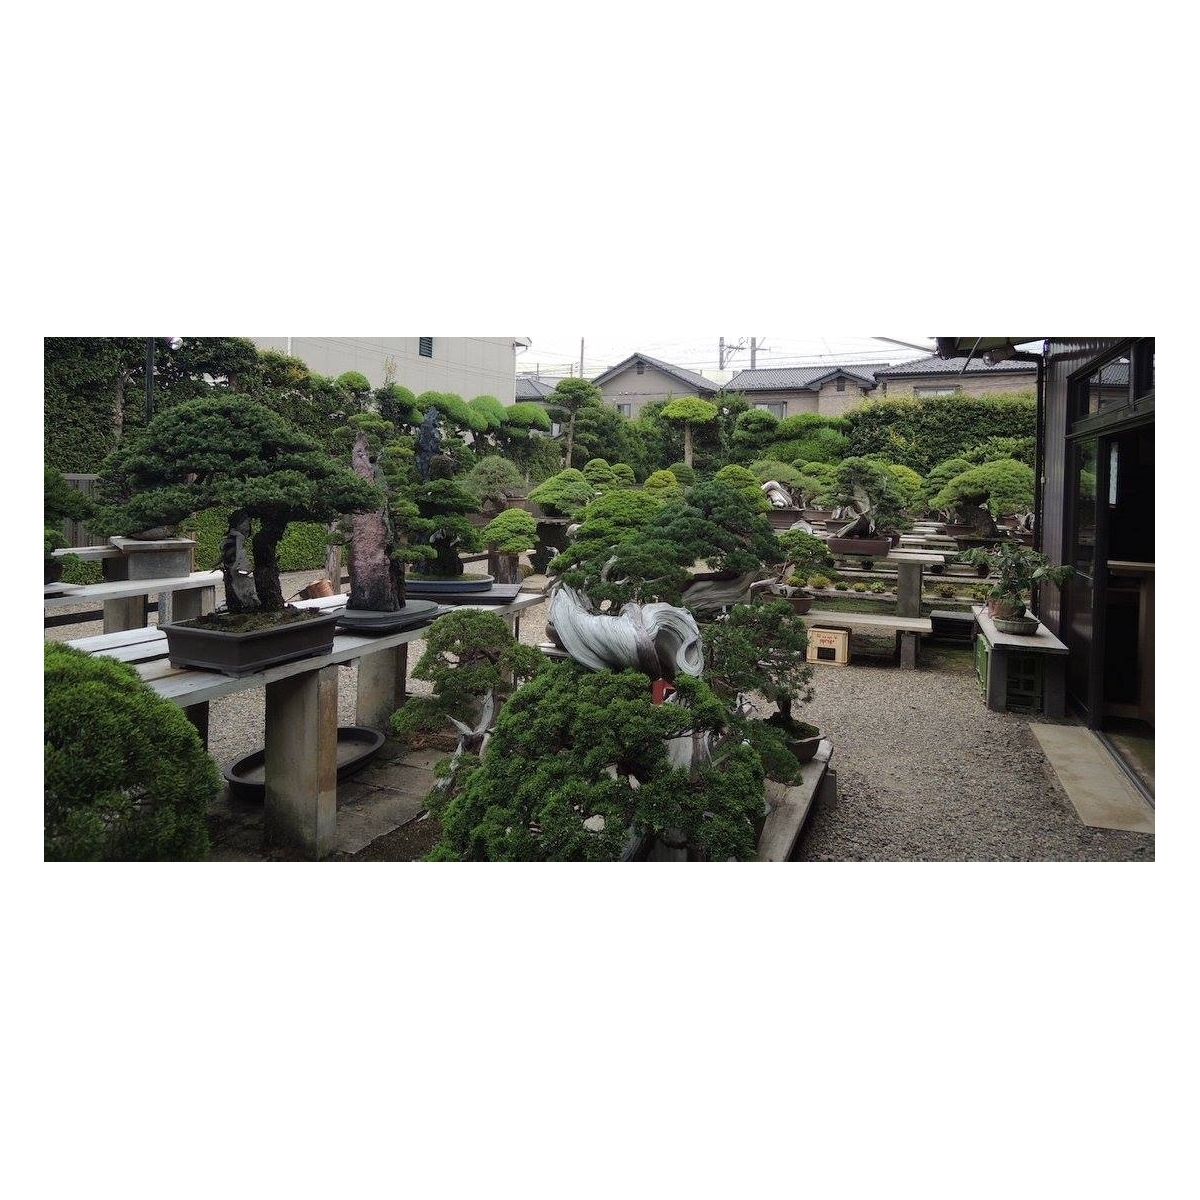 Trip to Japan 2016 Part Three (Kimura's Garden)